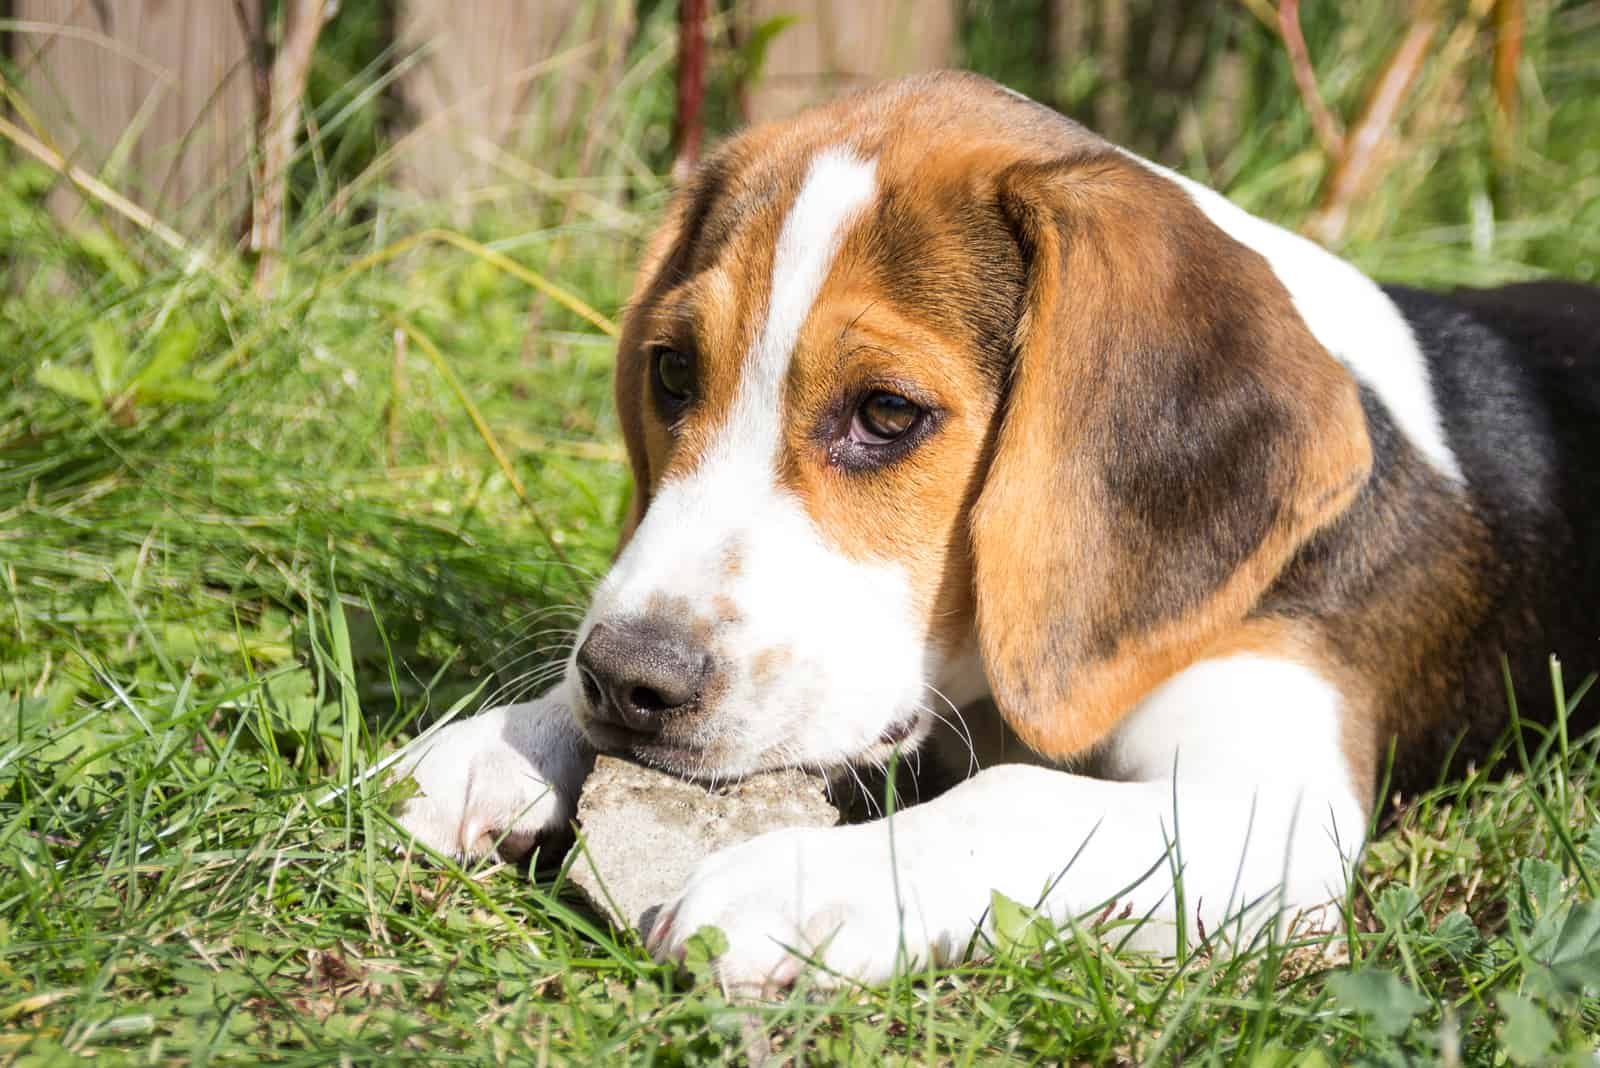 a beagle puppy dog lies on the grass with a rock